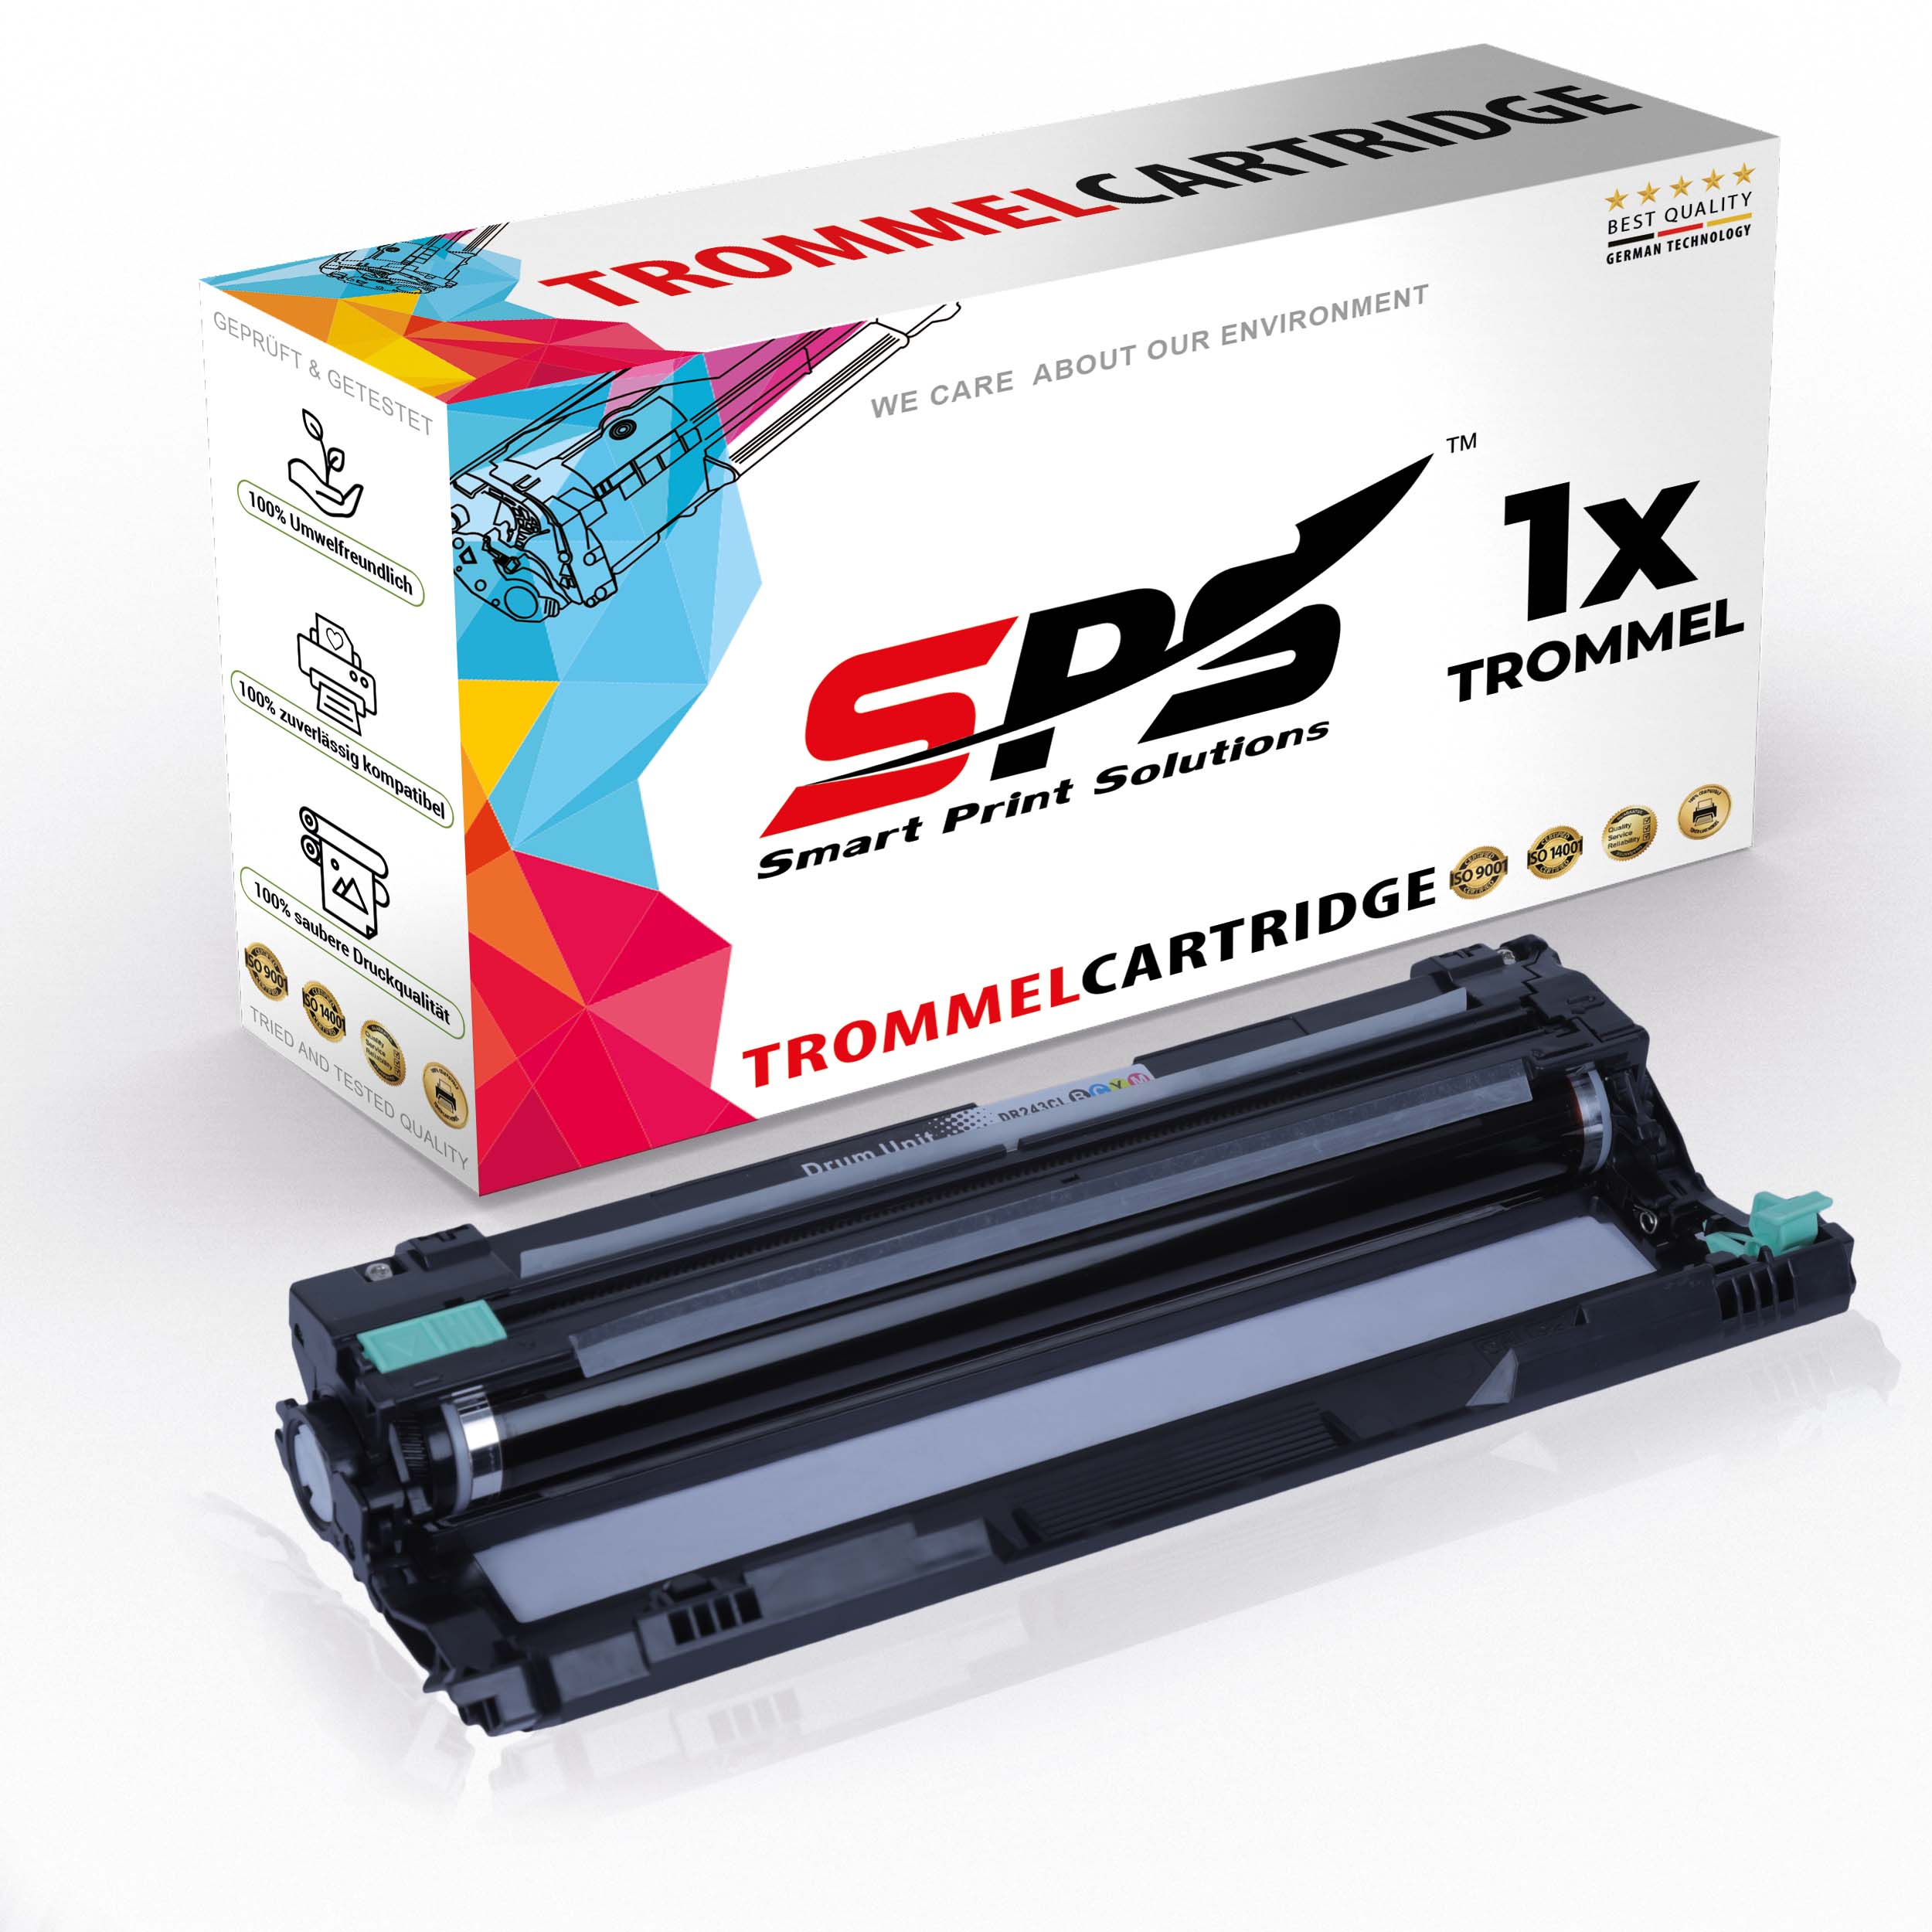 1x High Quality Toner/Reset Black kompatibel zu CLT-K406S für SAMSUNG CLX-3305FW 